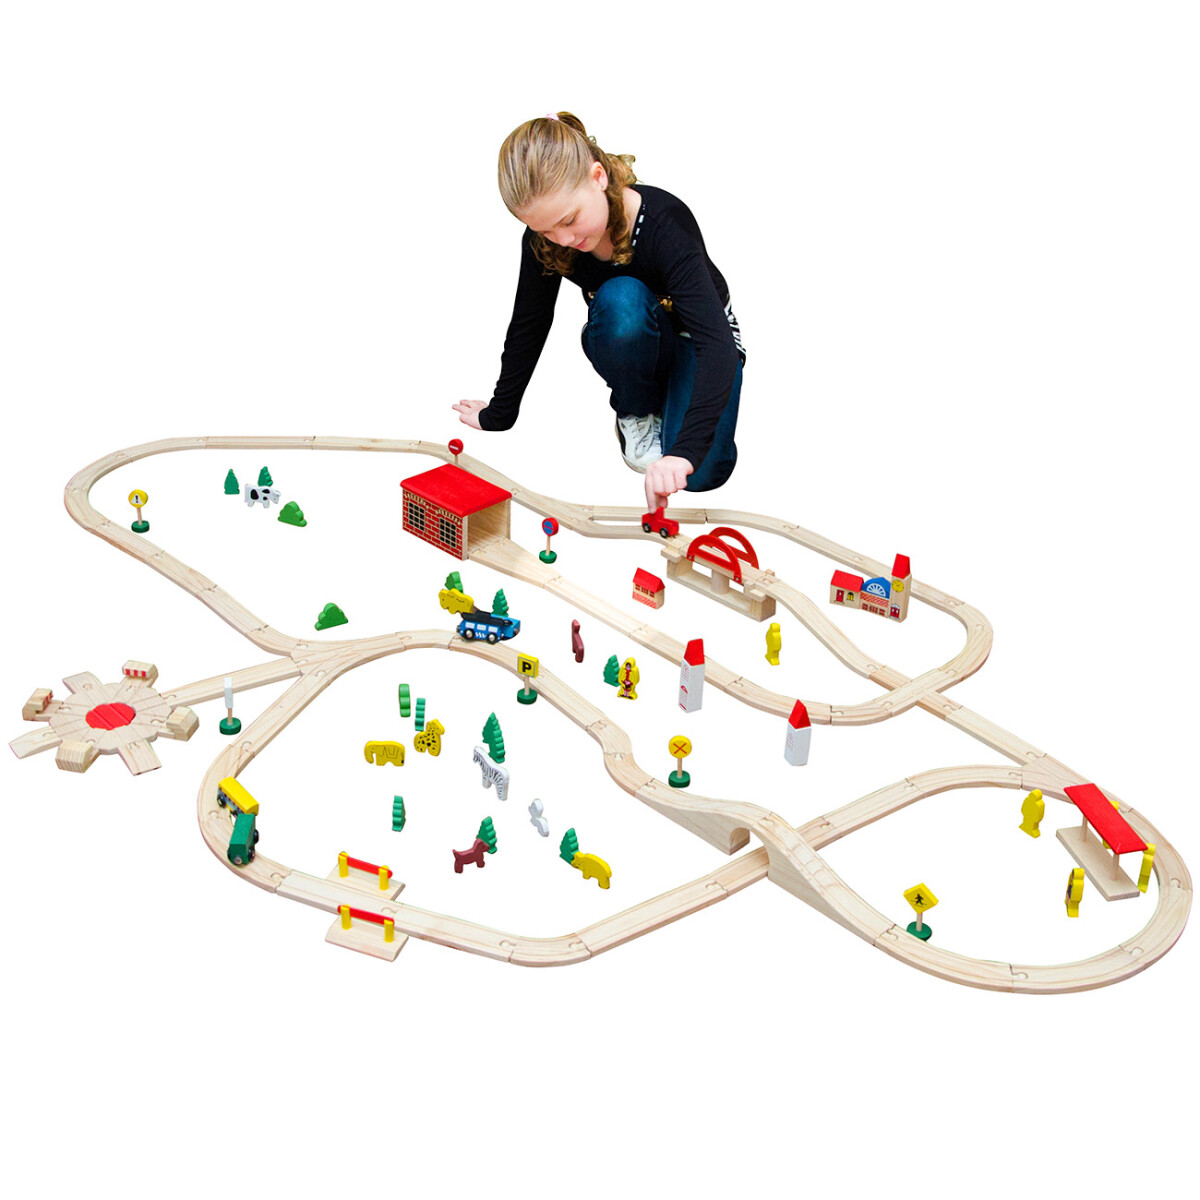 120-teilige Holzeisenbahn Set Spielzeug-Eisenbahn 8m lang